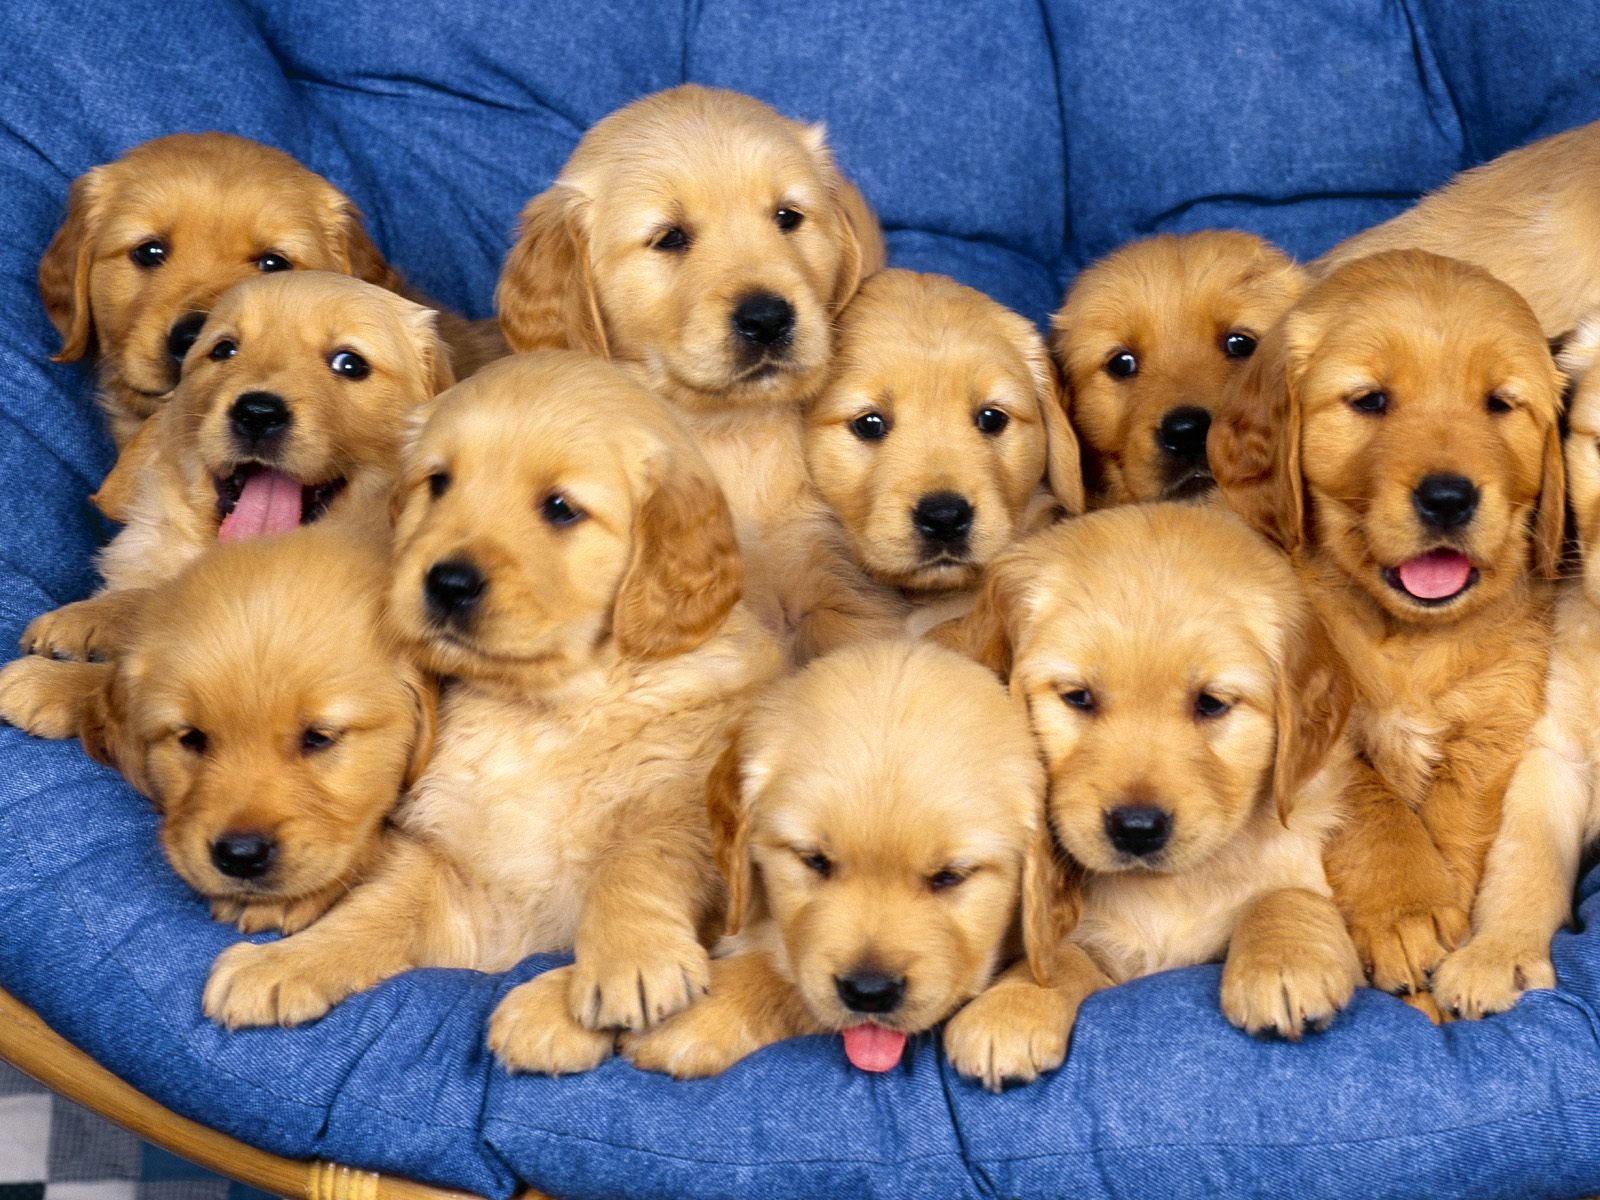 Dog Backgrounds for Desktop Beautiful Puppy Dogs Hd Desktop Wallpapers